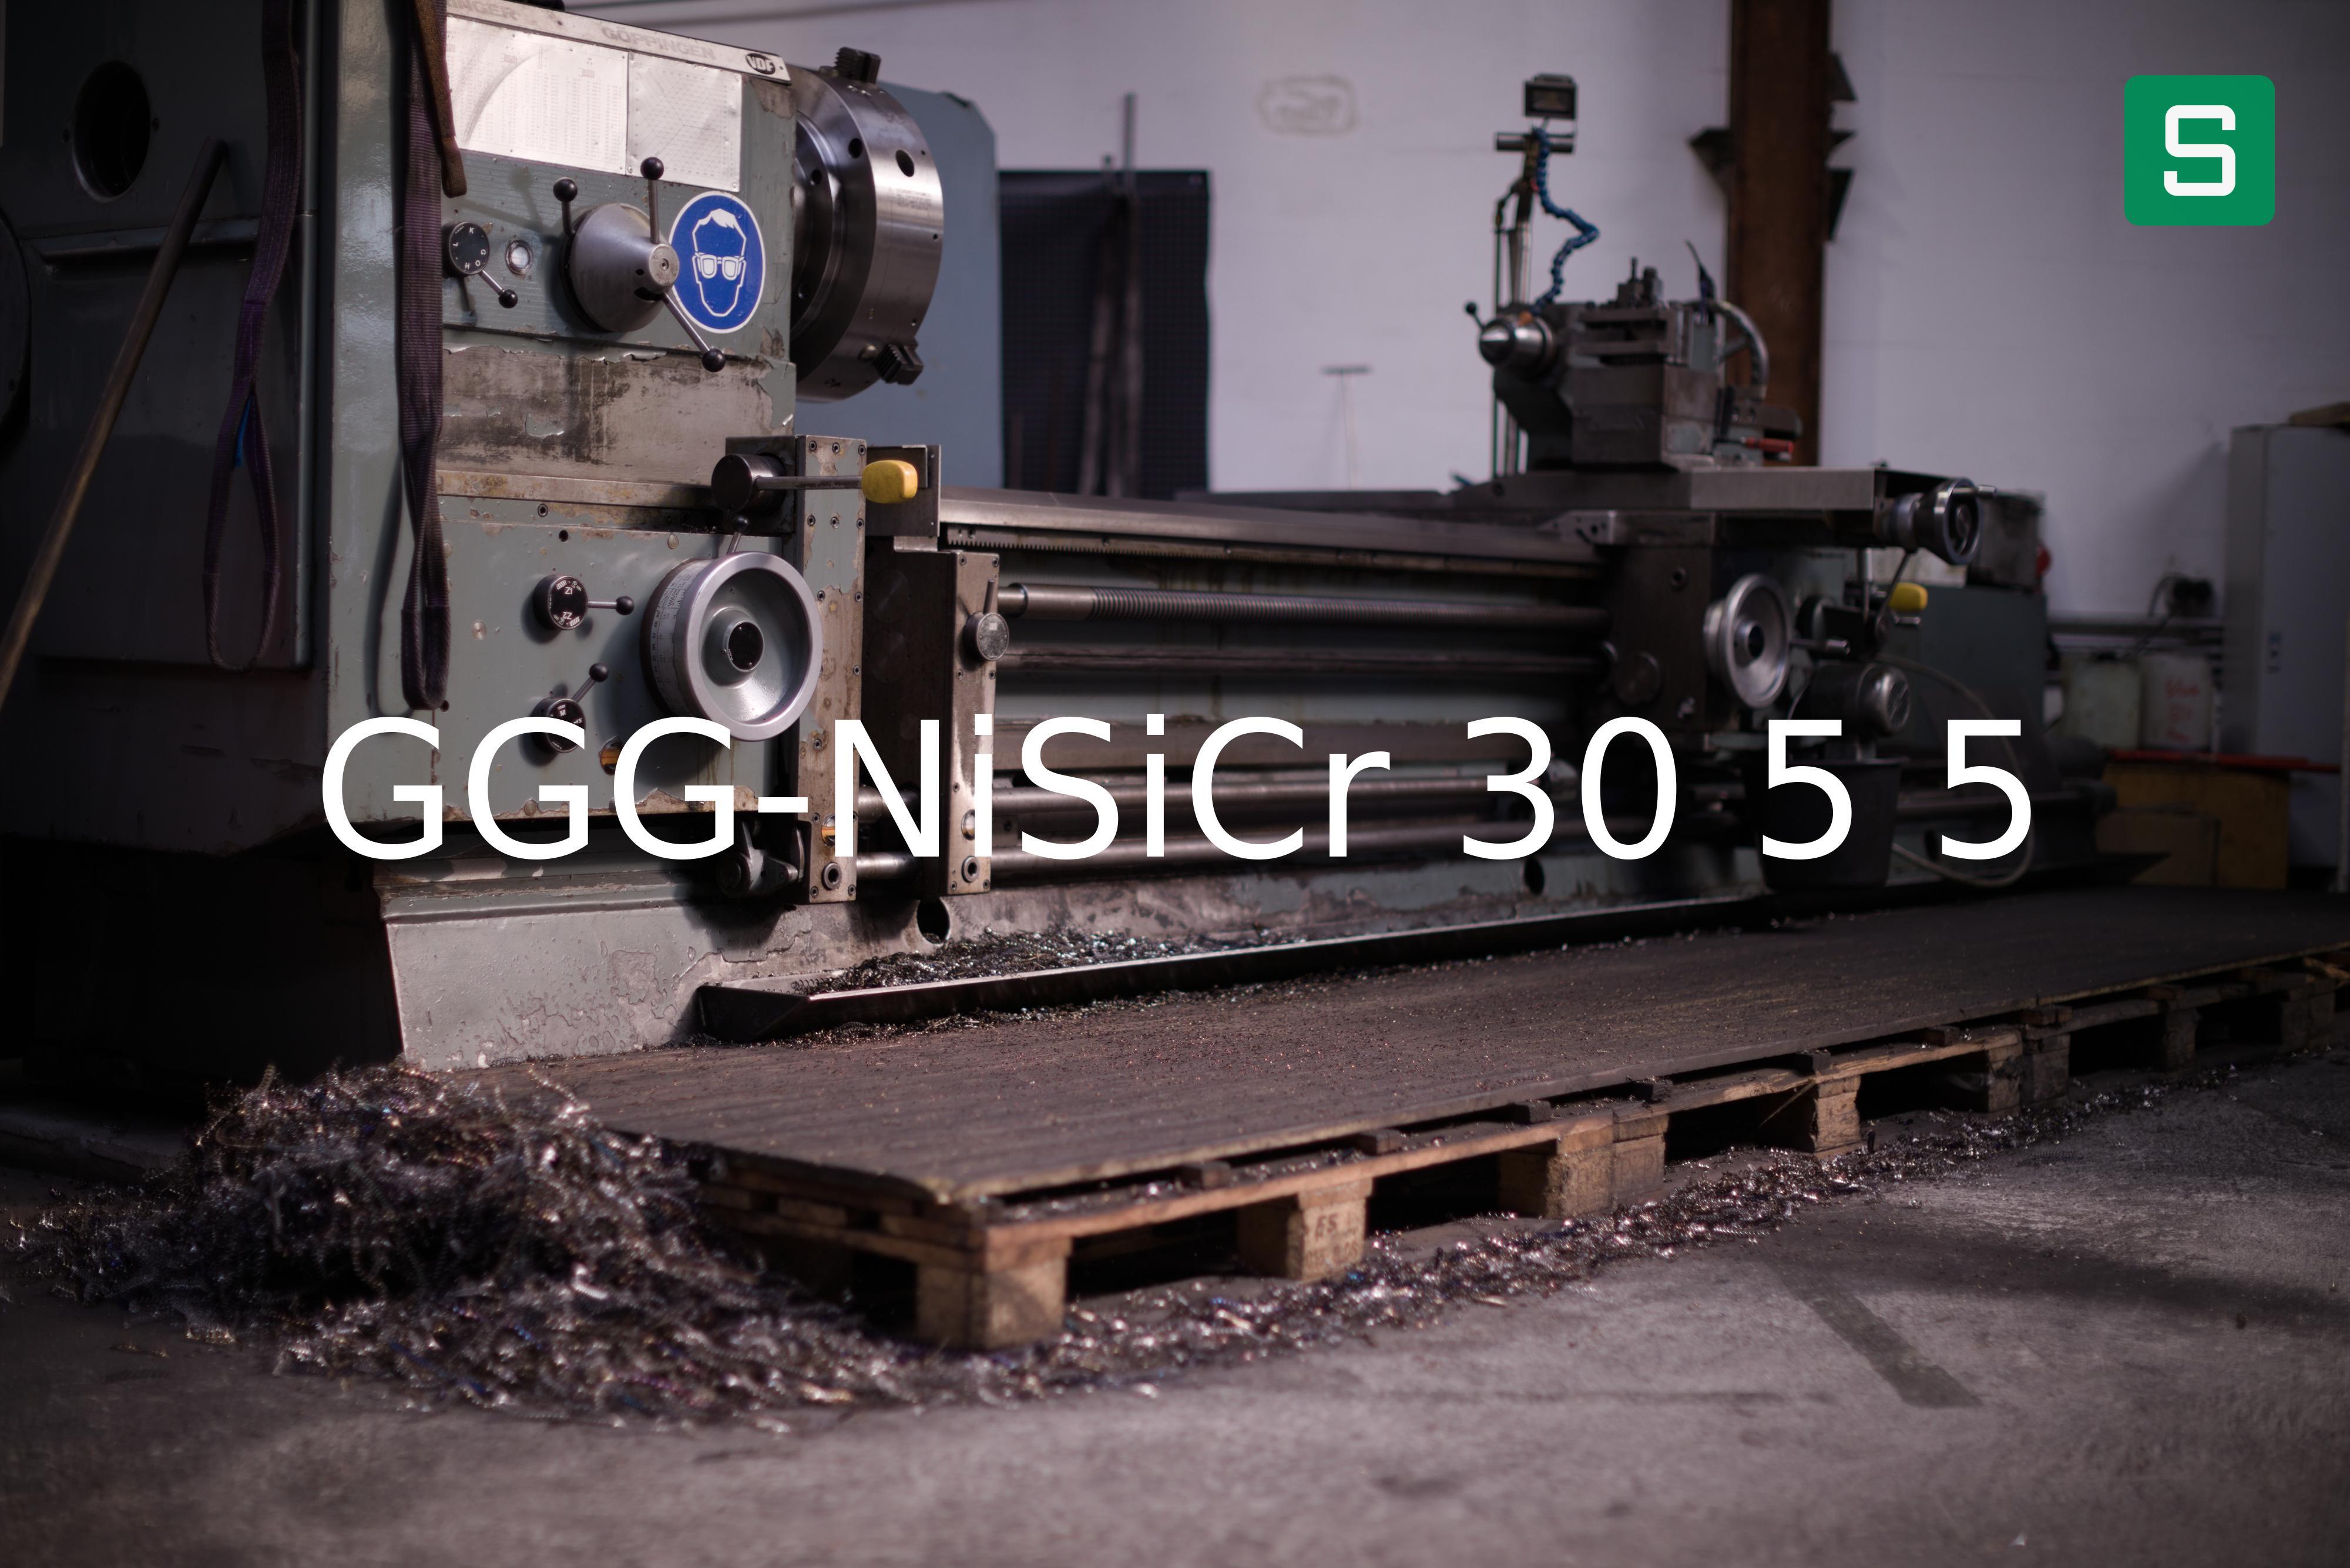 Steel Material: GGG-NiSiCr 30 5 5